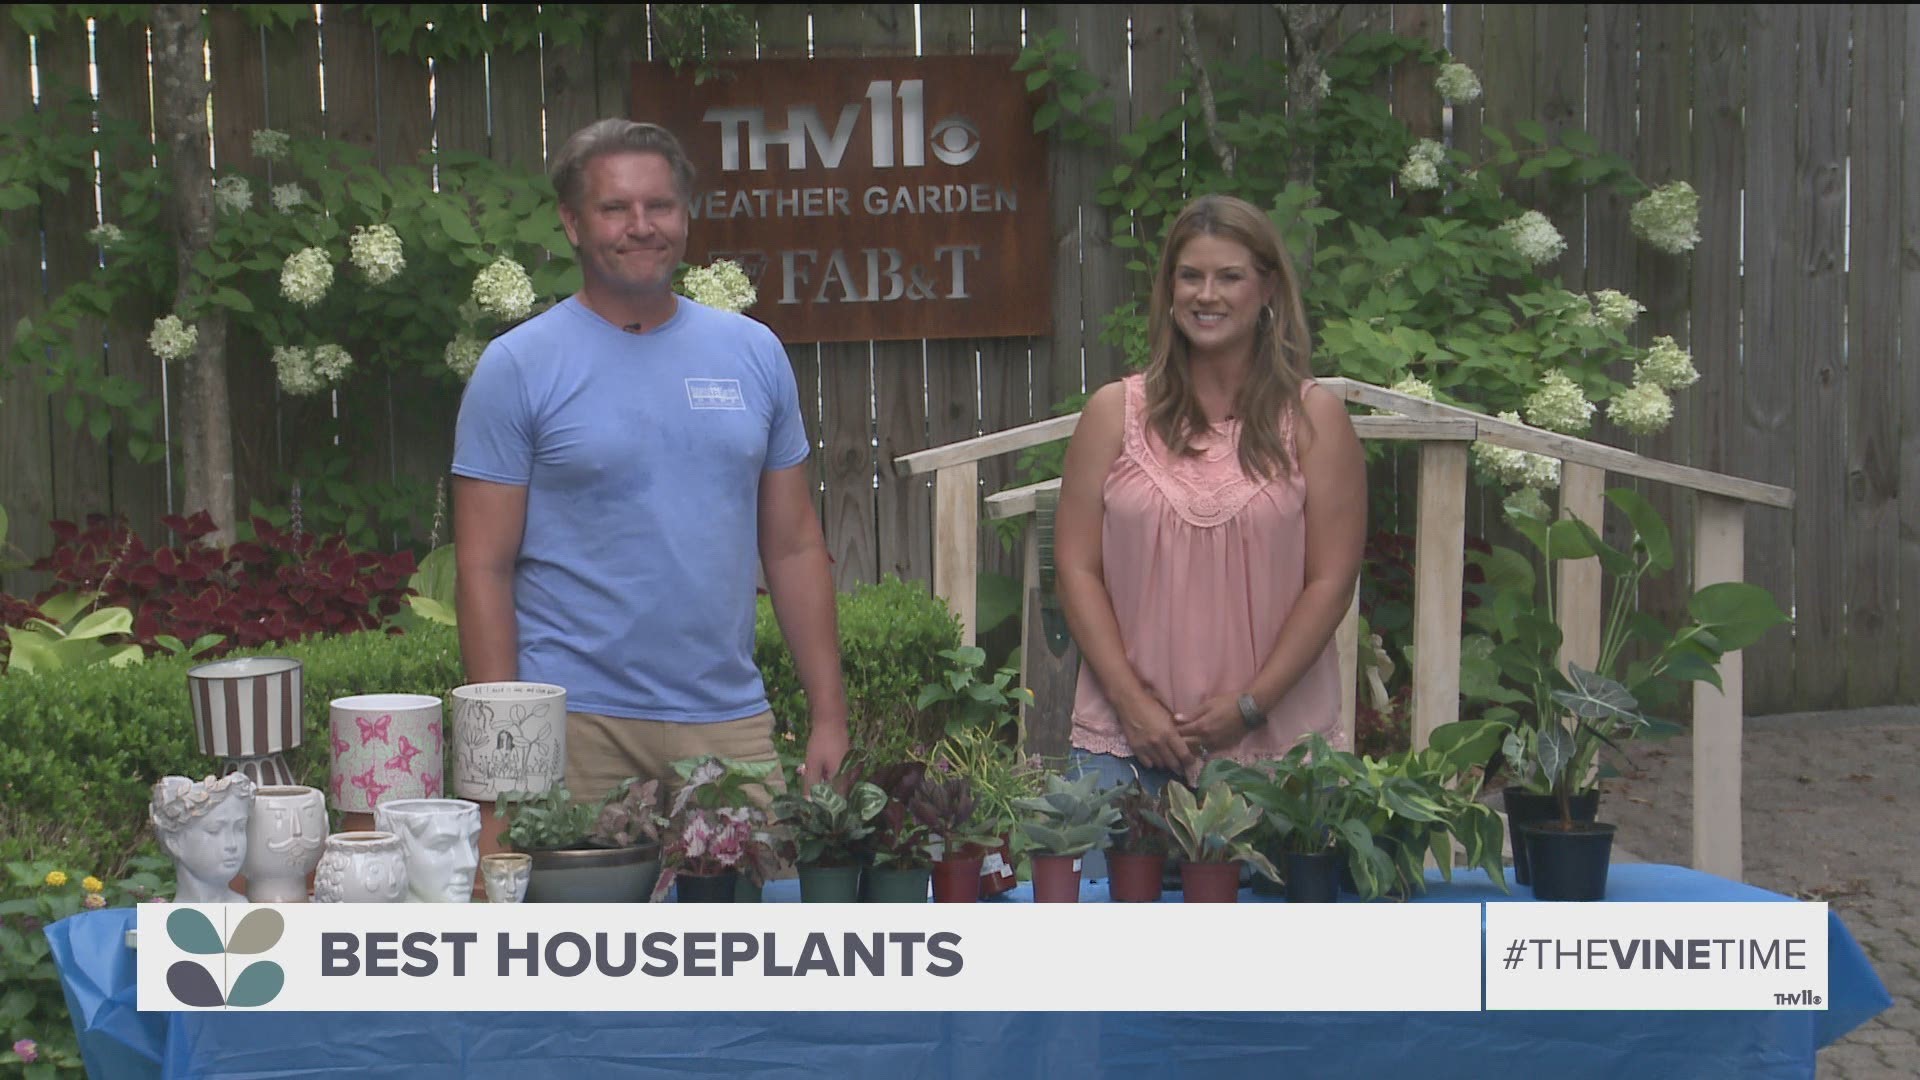 Houseplants can really help make a house feel like a home, so Chris H. Olsen tells us why houseplants are so popular!